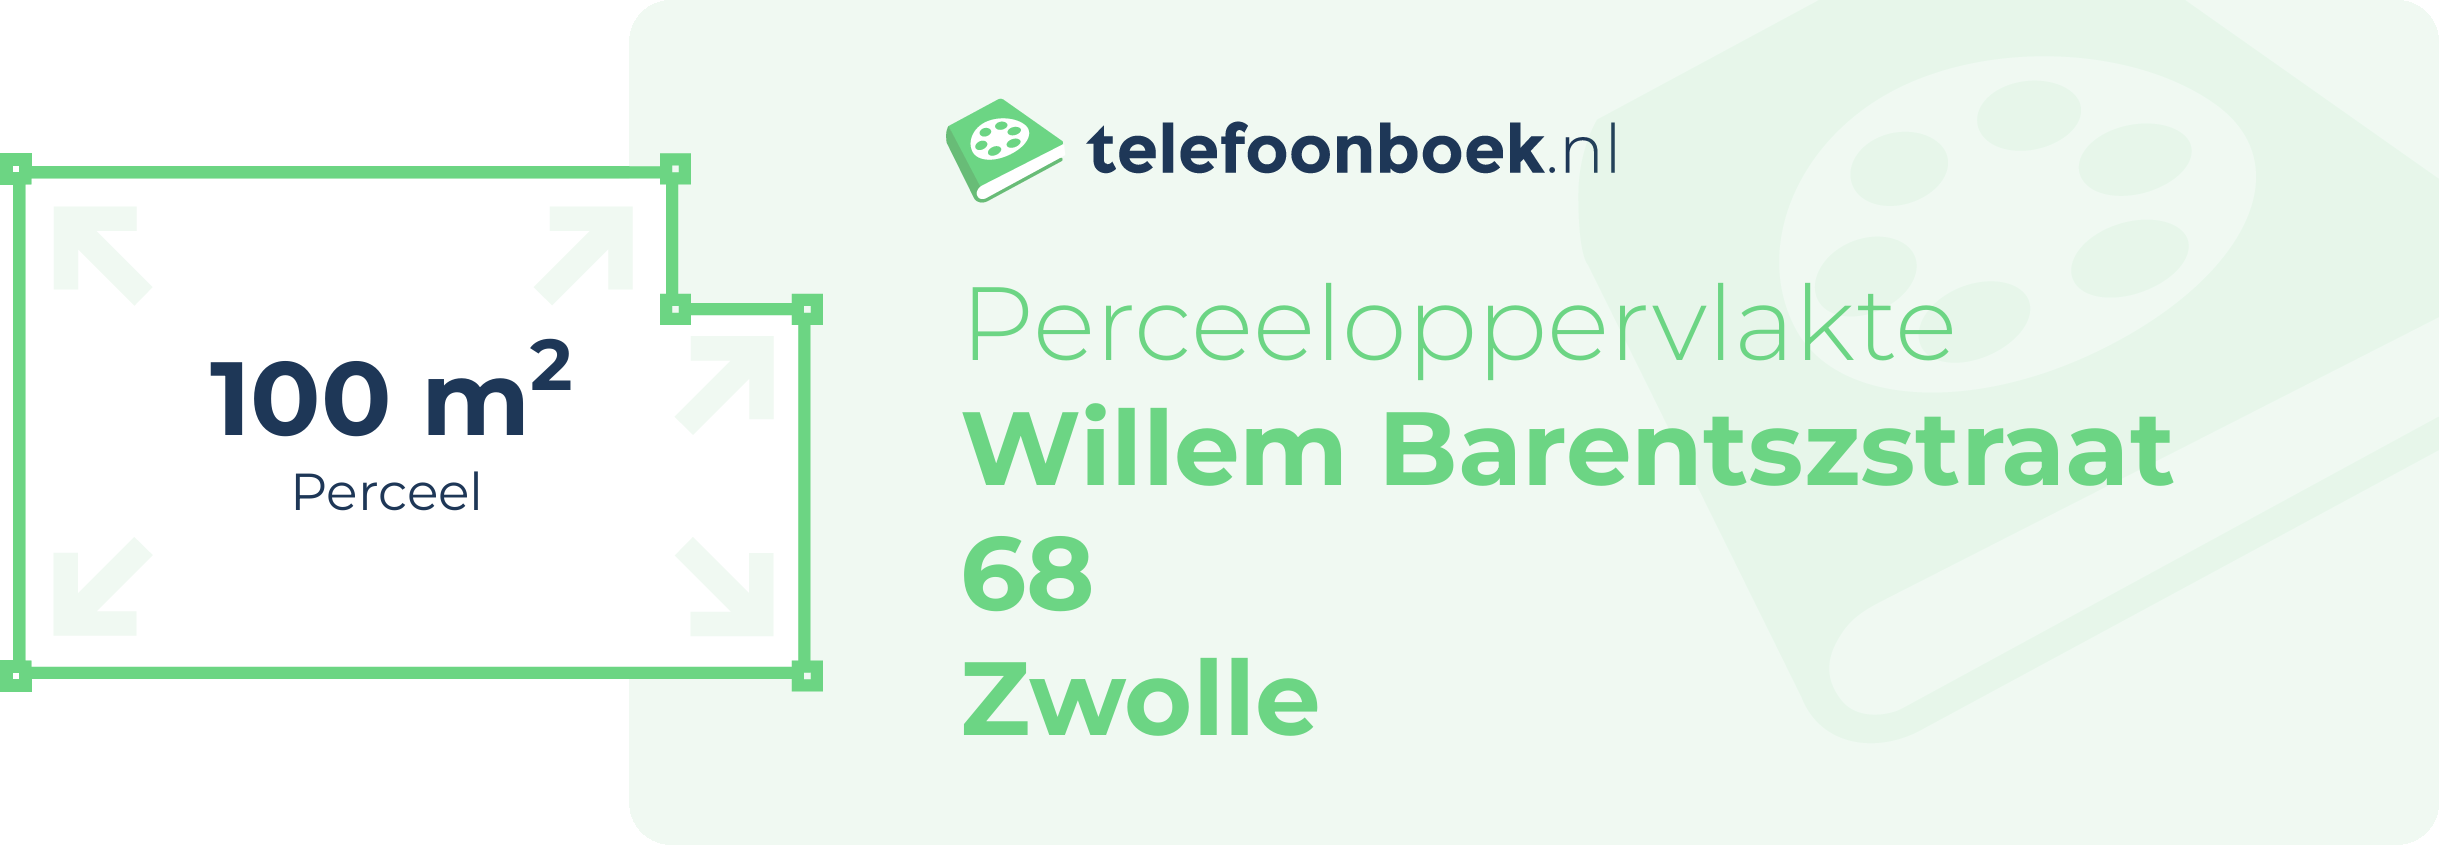 Perceeloppervlakte Willem Barentszstraat 68 Zwolle